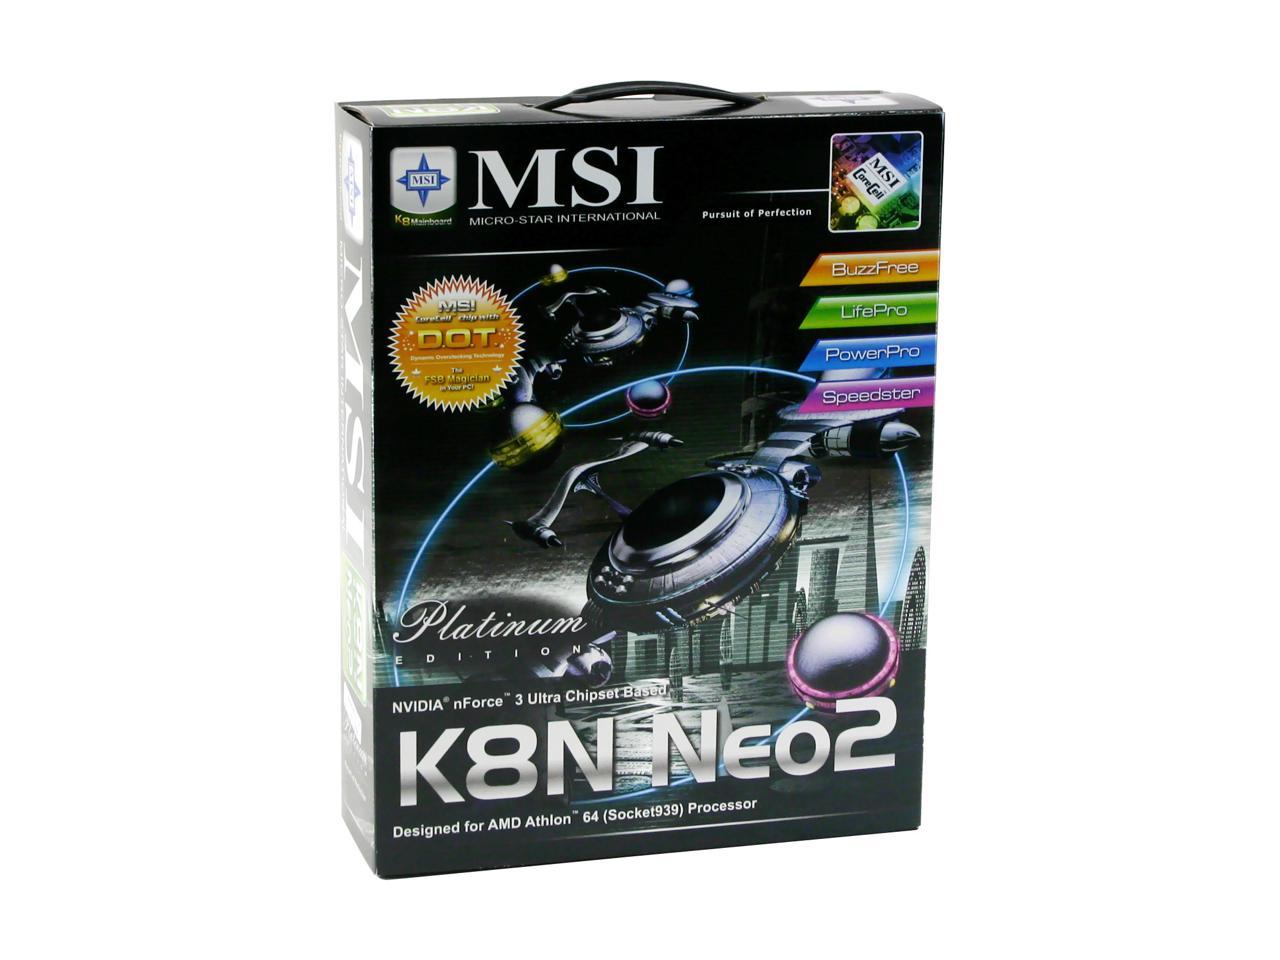 MSI K8N NEO2 PLATINUM 939 ATX AMD Motherboard - Newegg.com